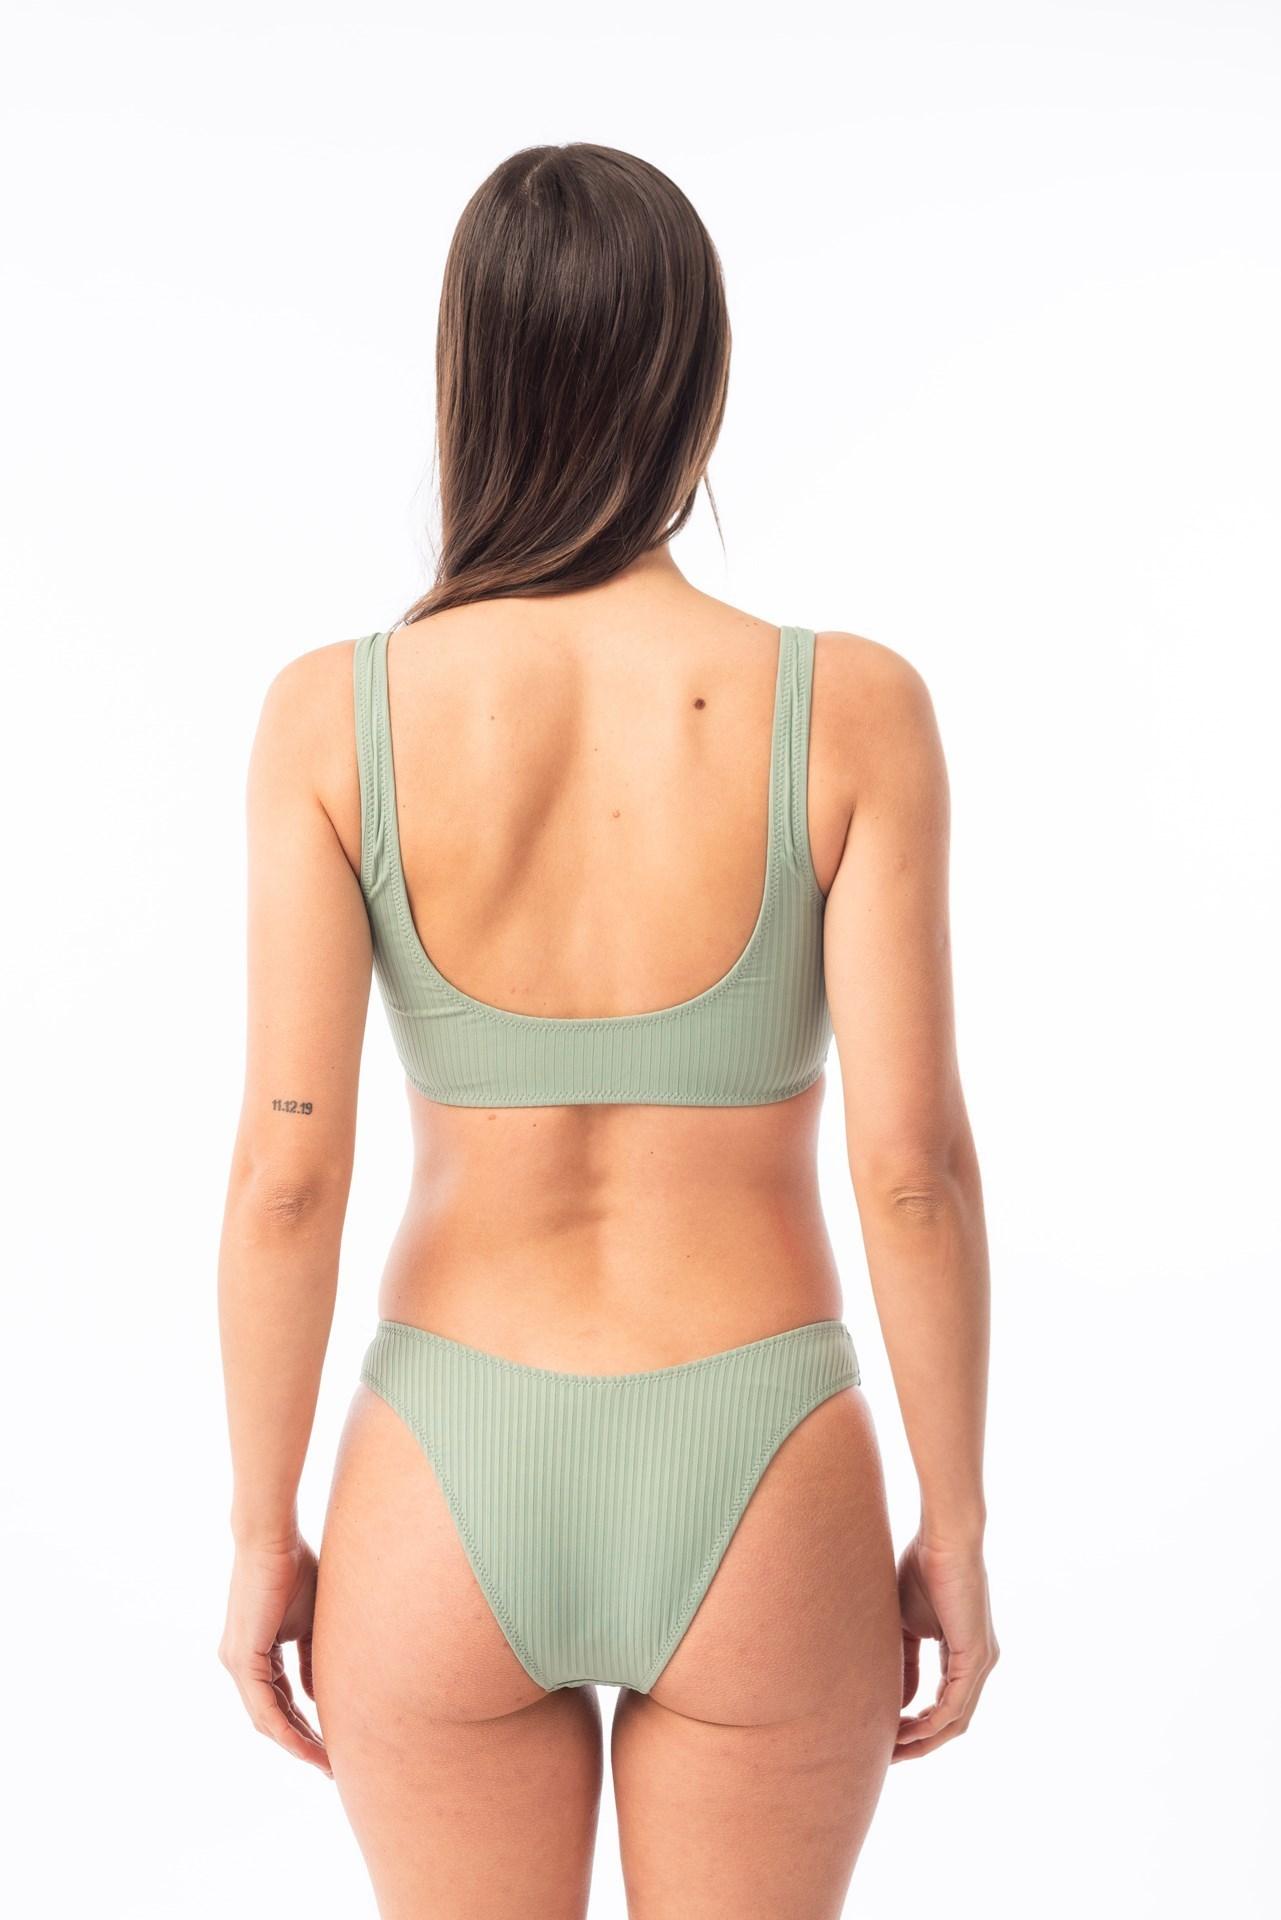 Paraiso- Bikini Top con Argollas verde agua m